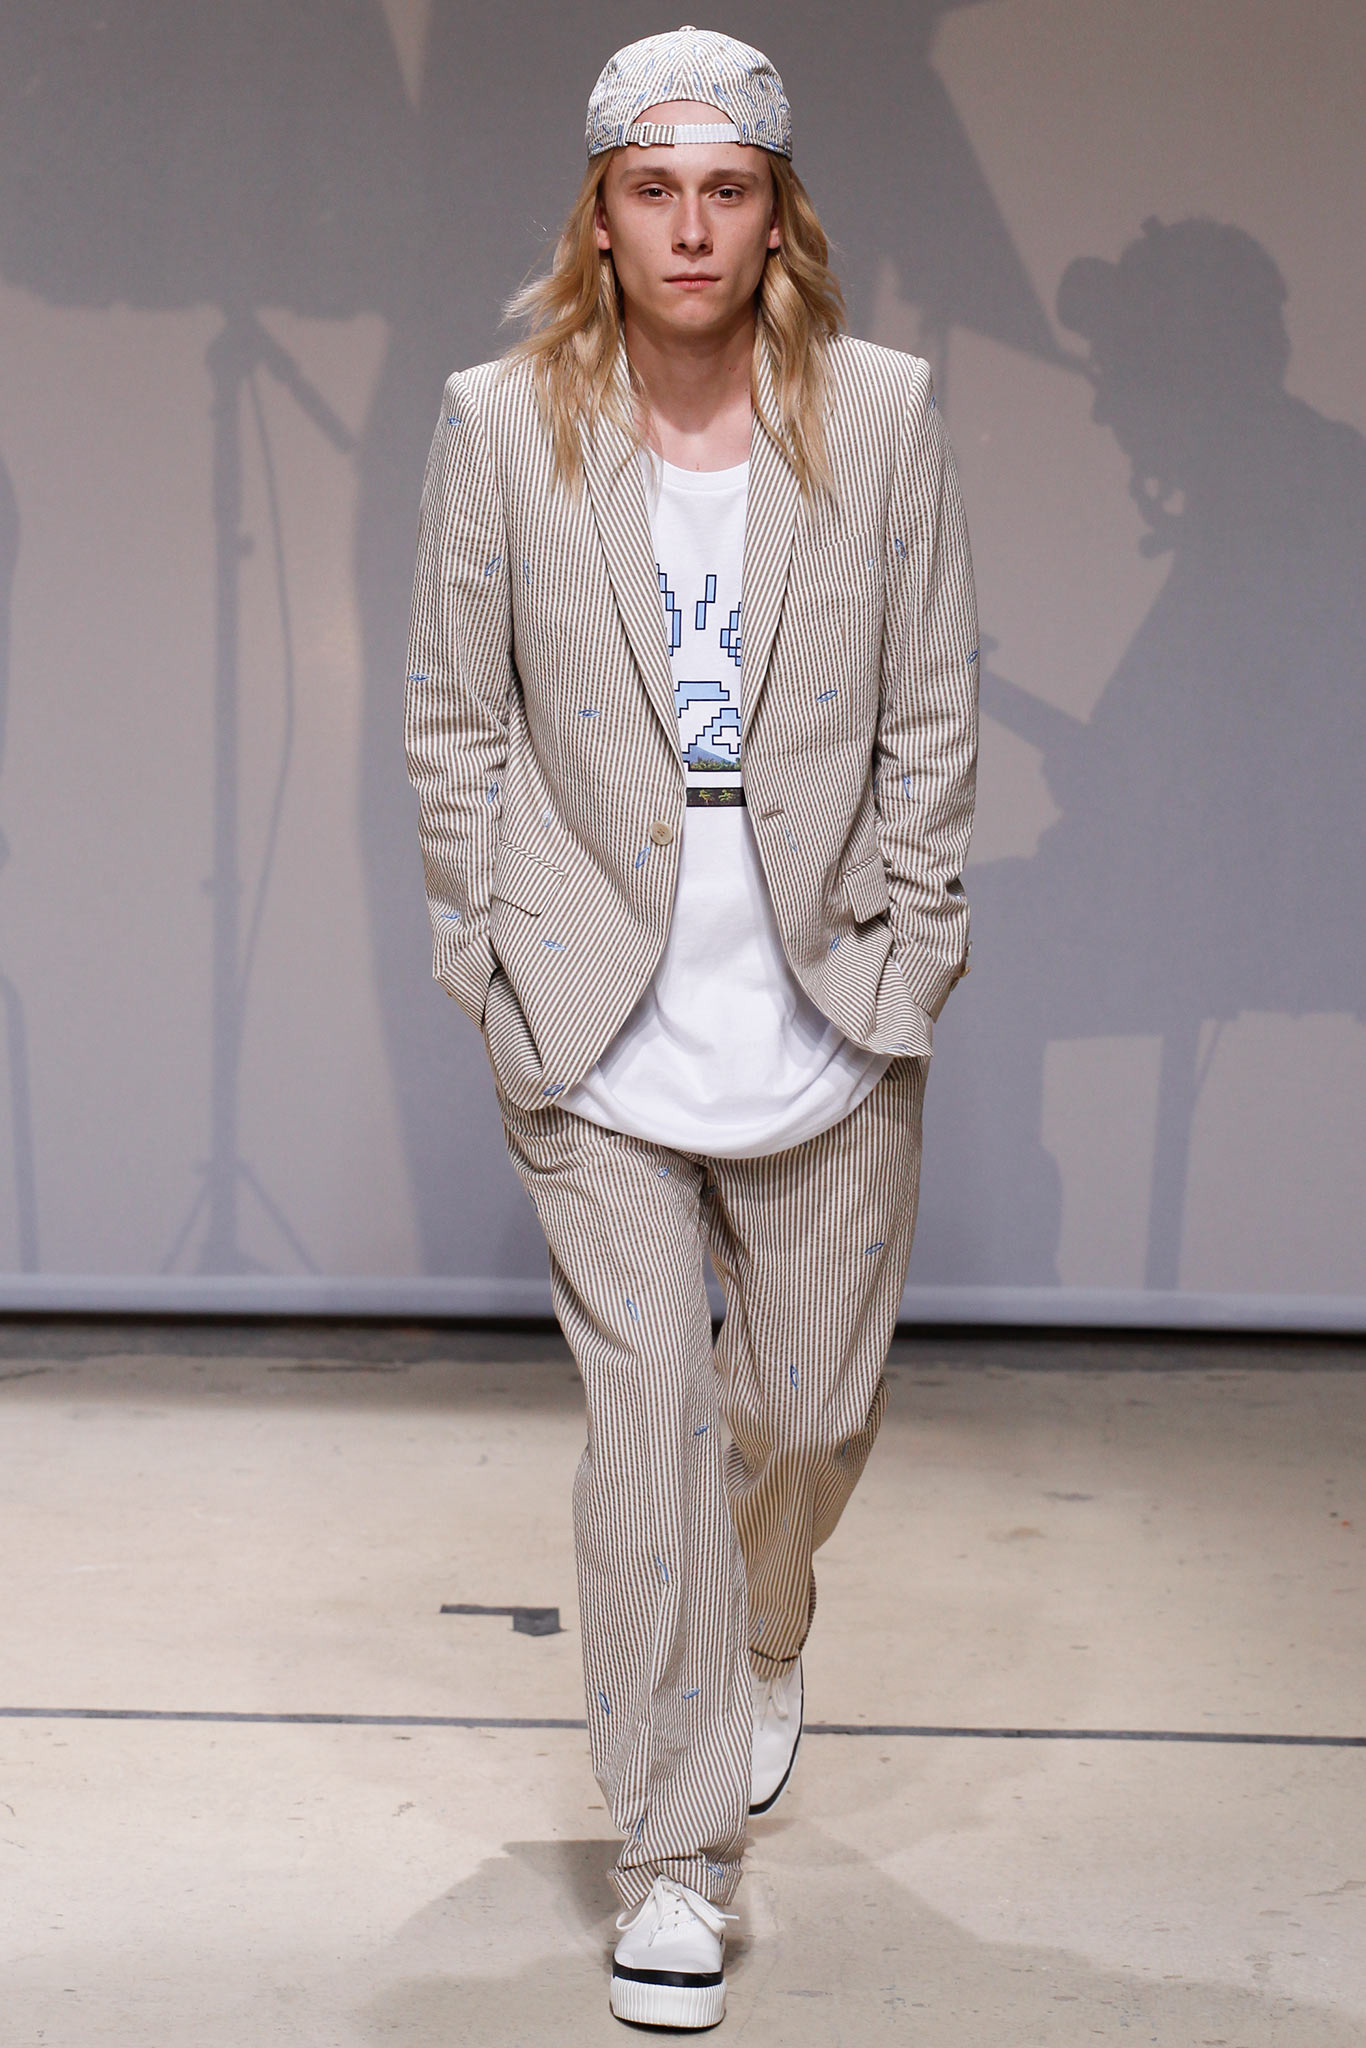 Julien David for Quiksilver – Paris Fashion Week Spring 2015 | The